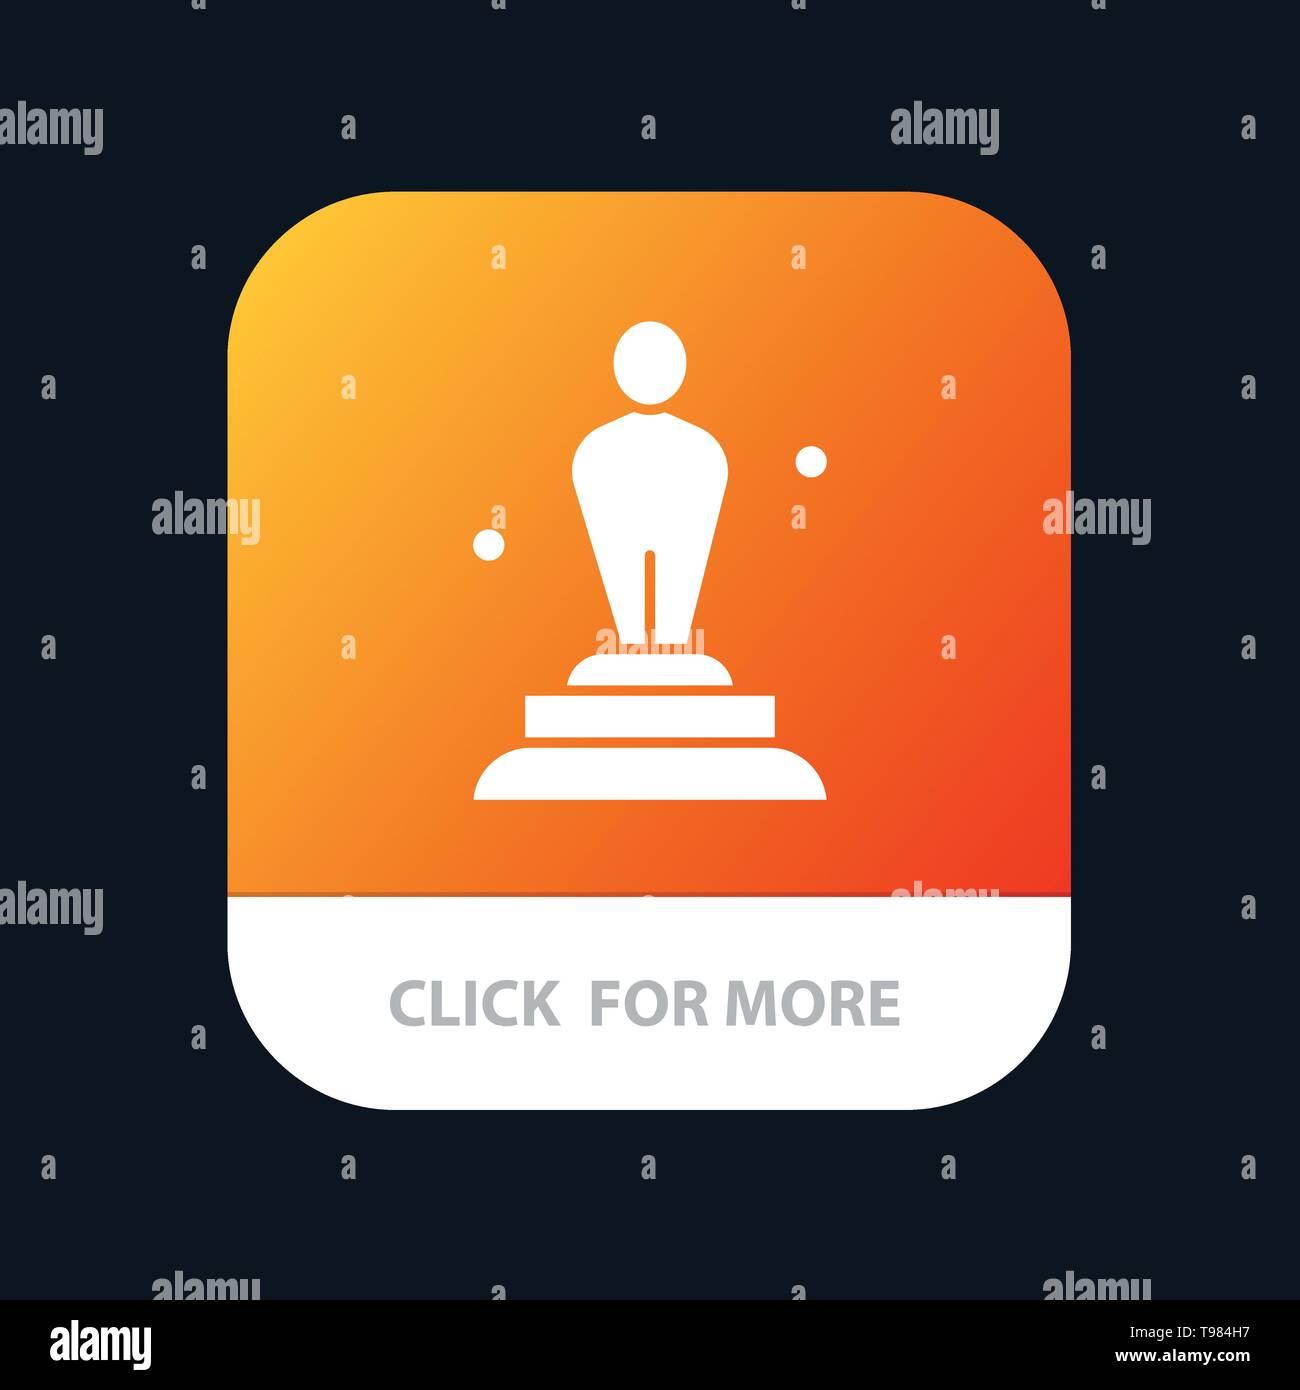 Academy, Award, Oscar, Statue, Trophy Mobile App Button. Android and IOS Glyph Version Stock Vector